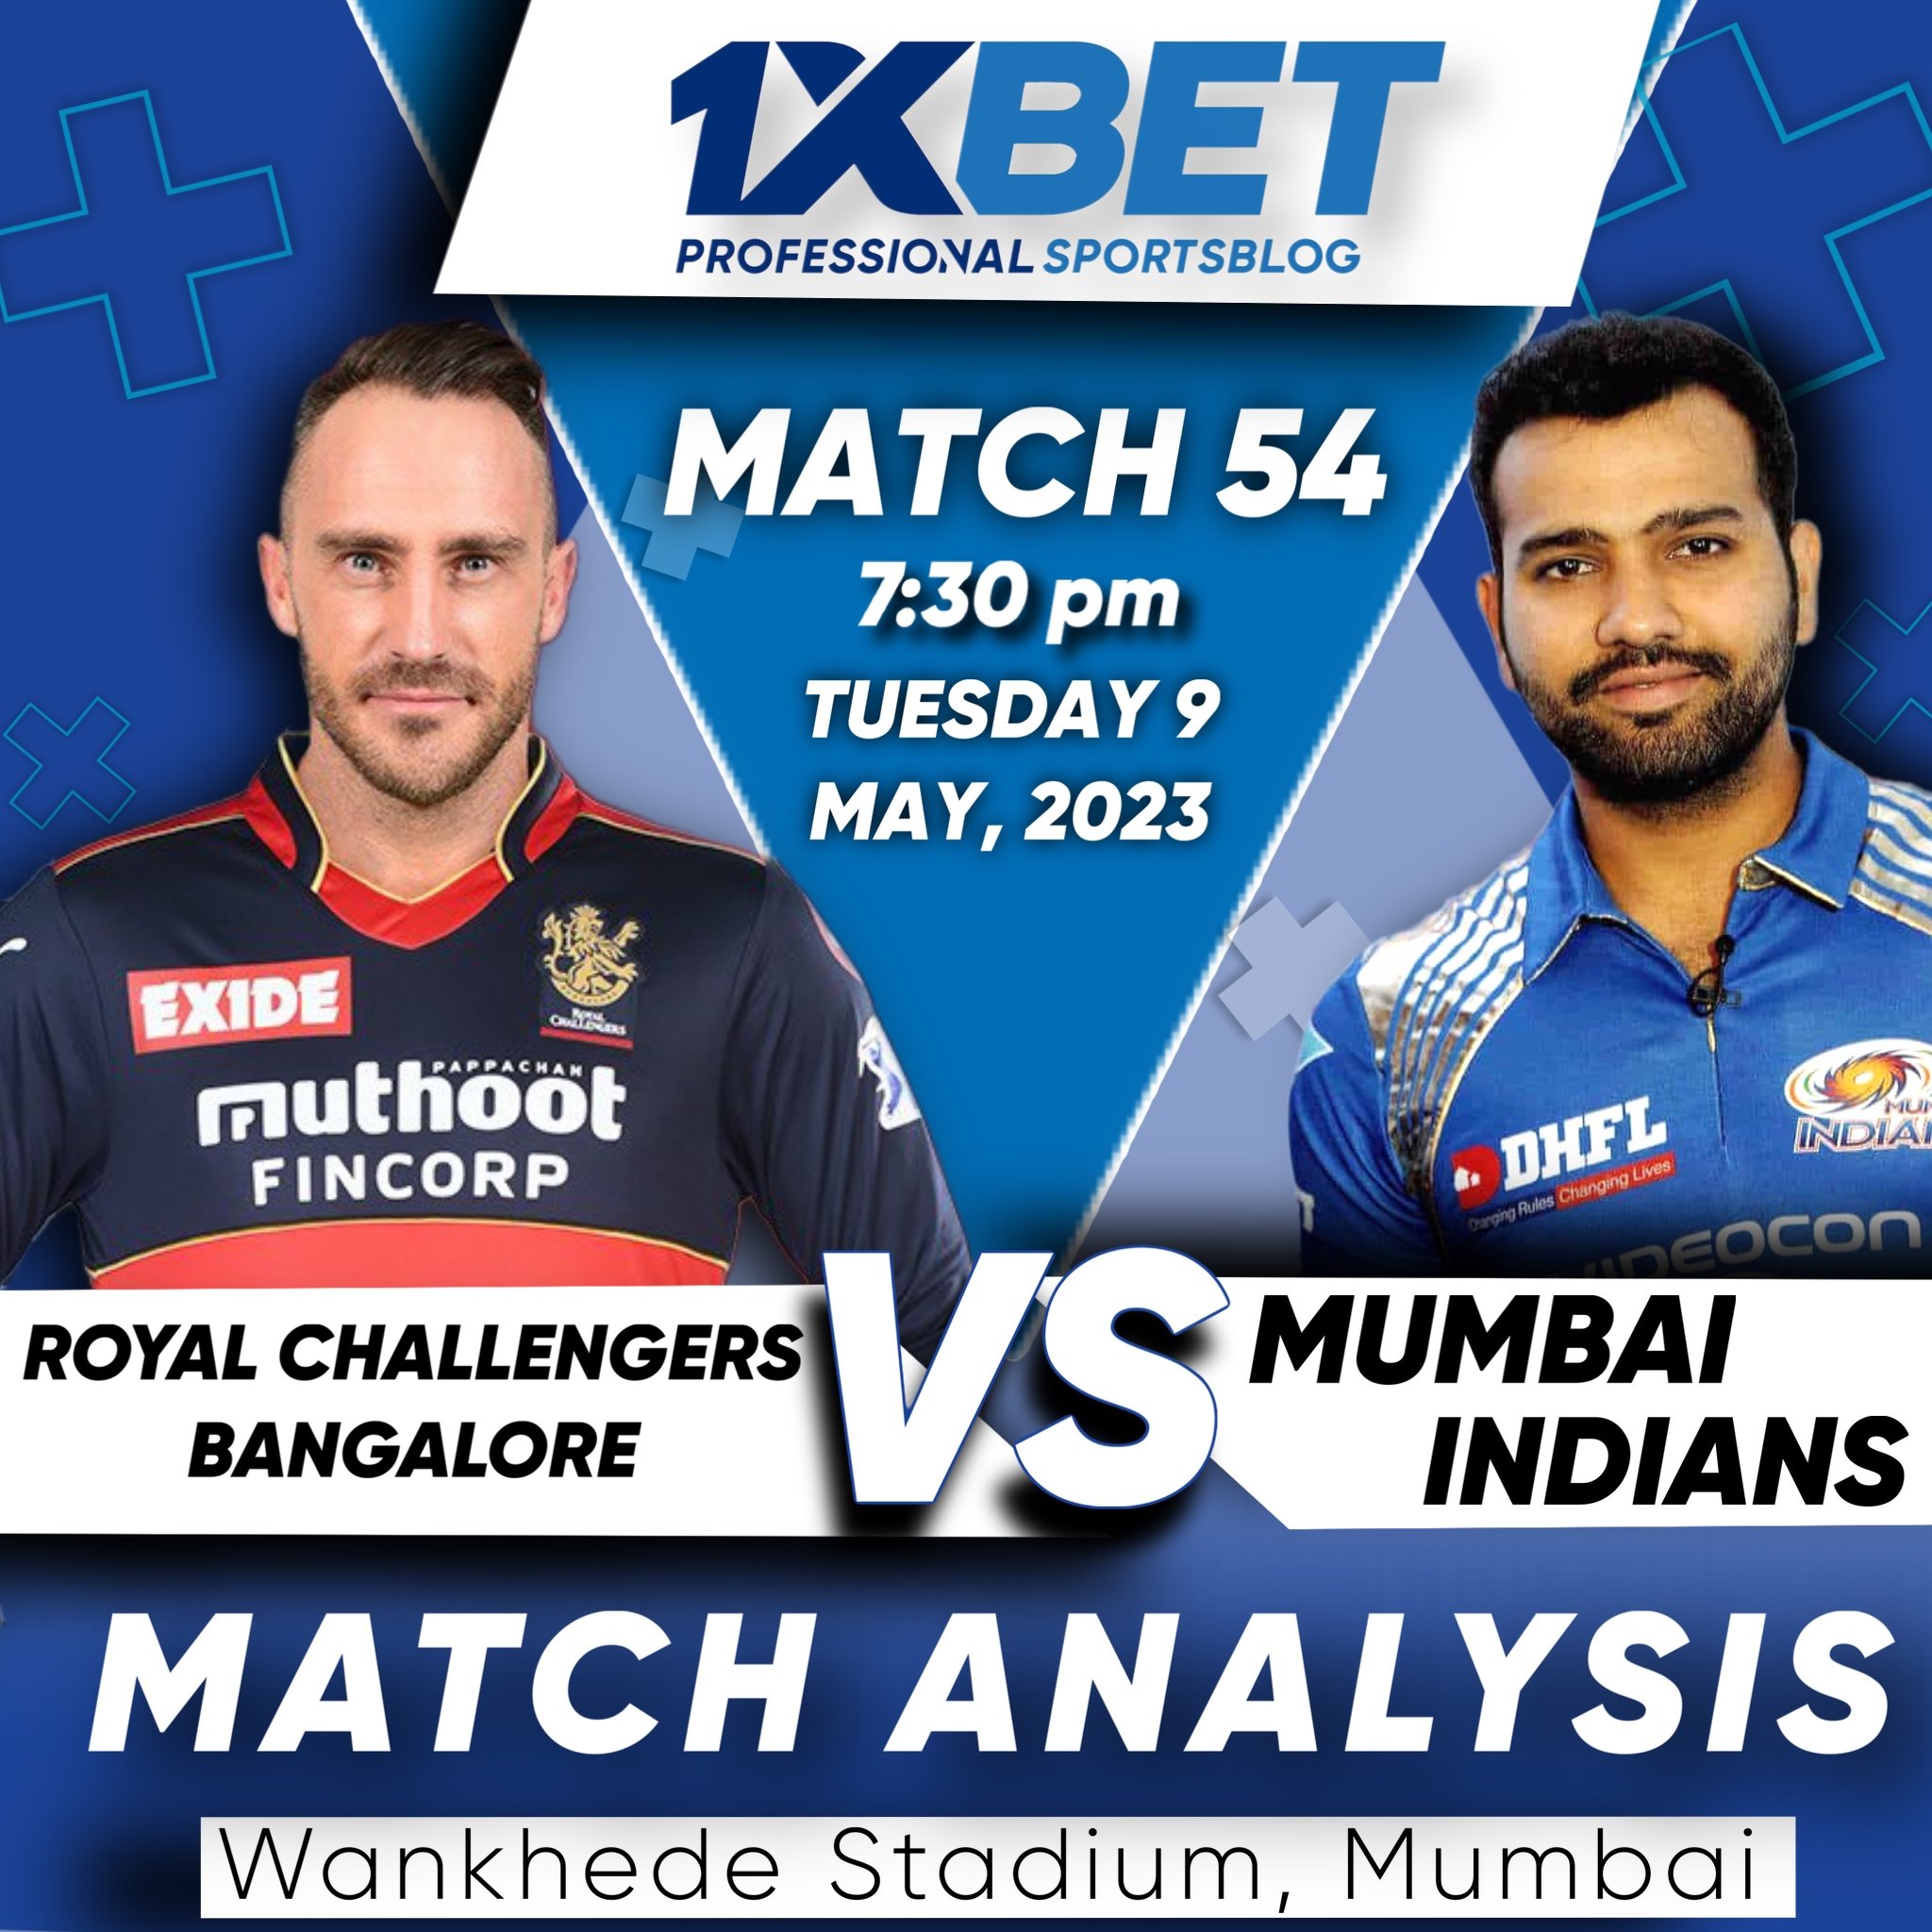 Mumbai Indians vs Royal Challengers Bangalore, IPL 2023, 54th Match Analysis